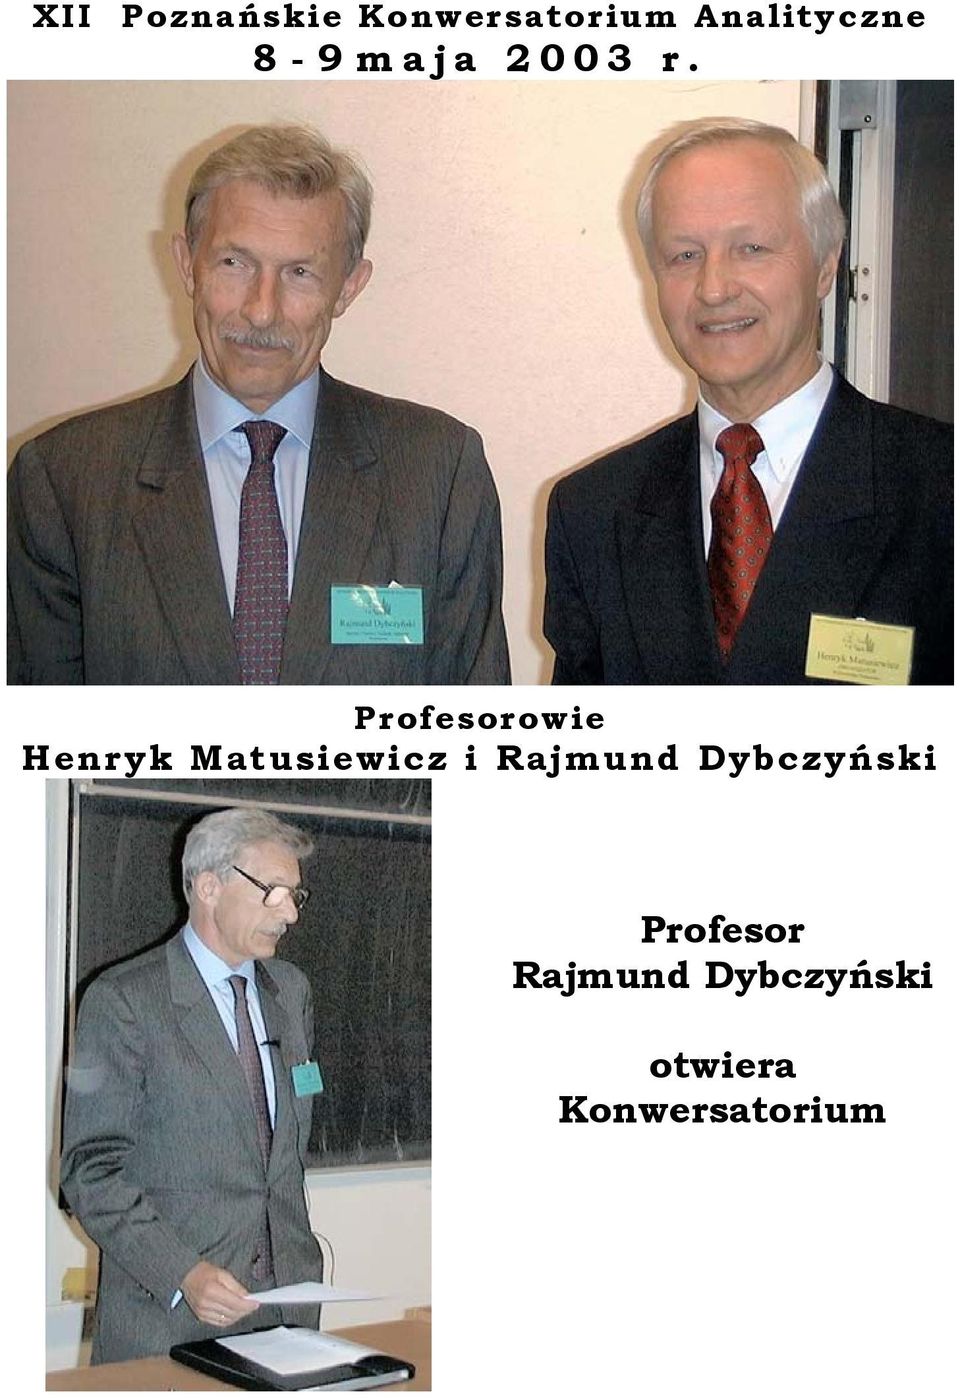 Profesorowie Henryk Matusiewicz i